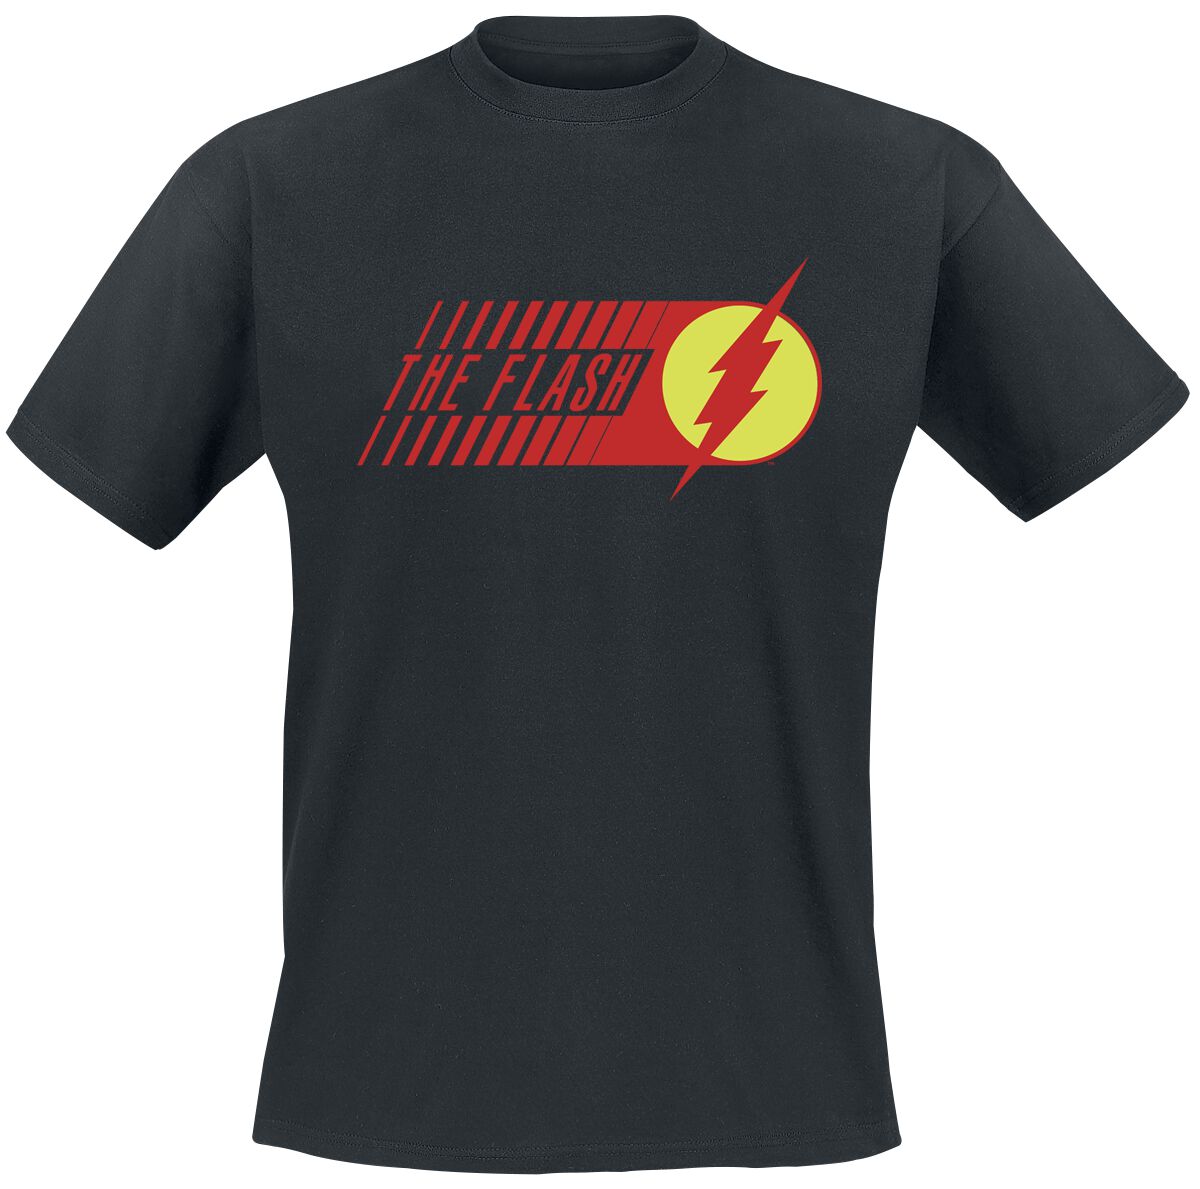 The Flash Flash - Starlabs T-Shirt schwarz in XL